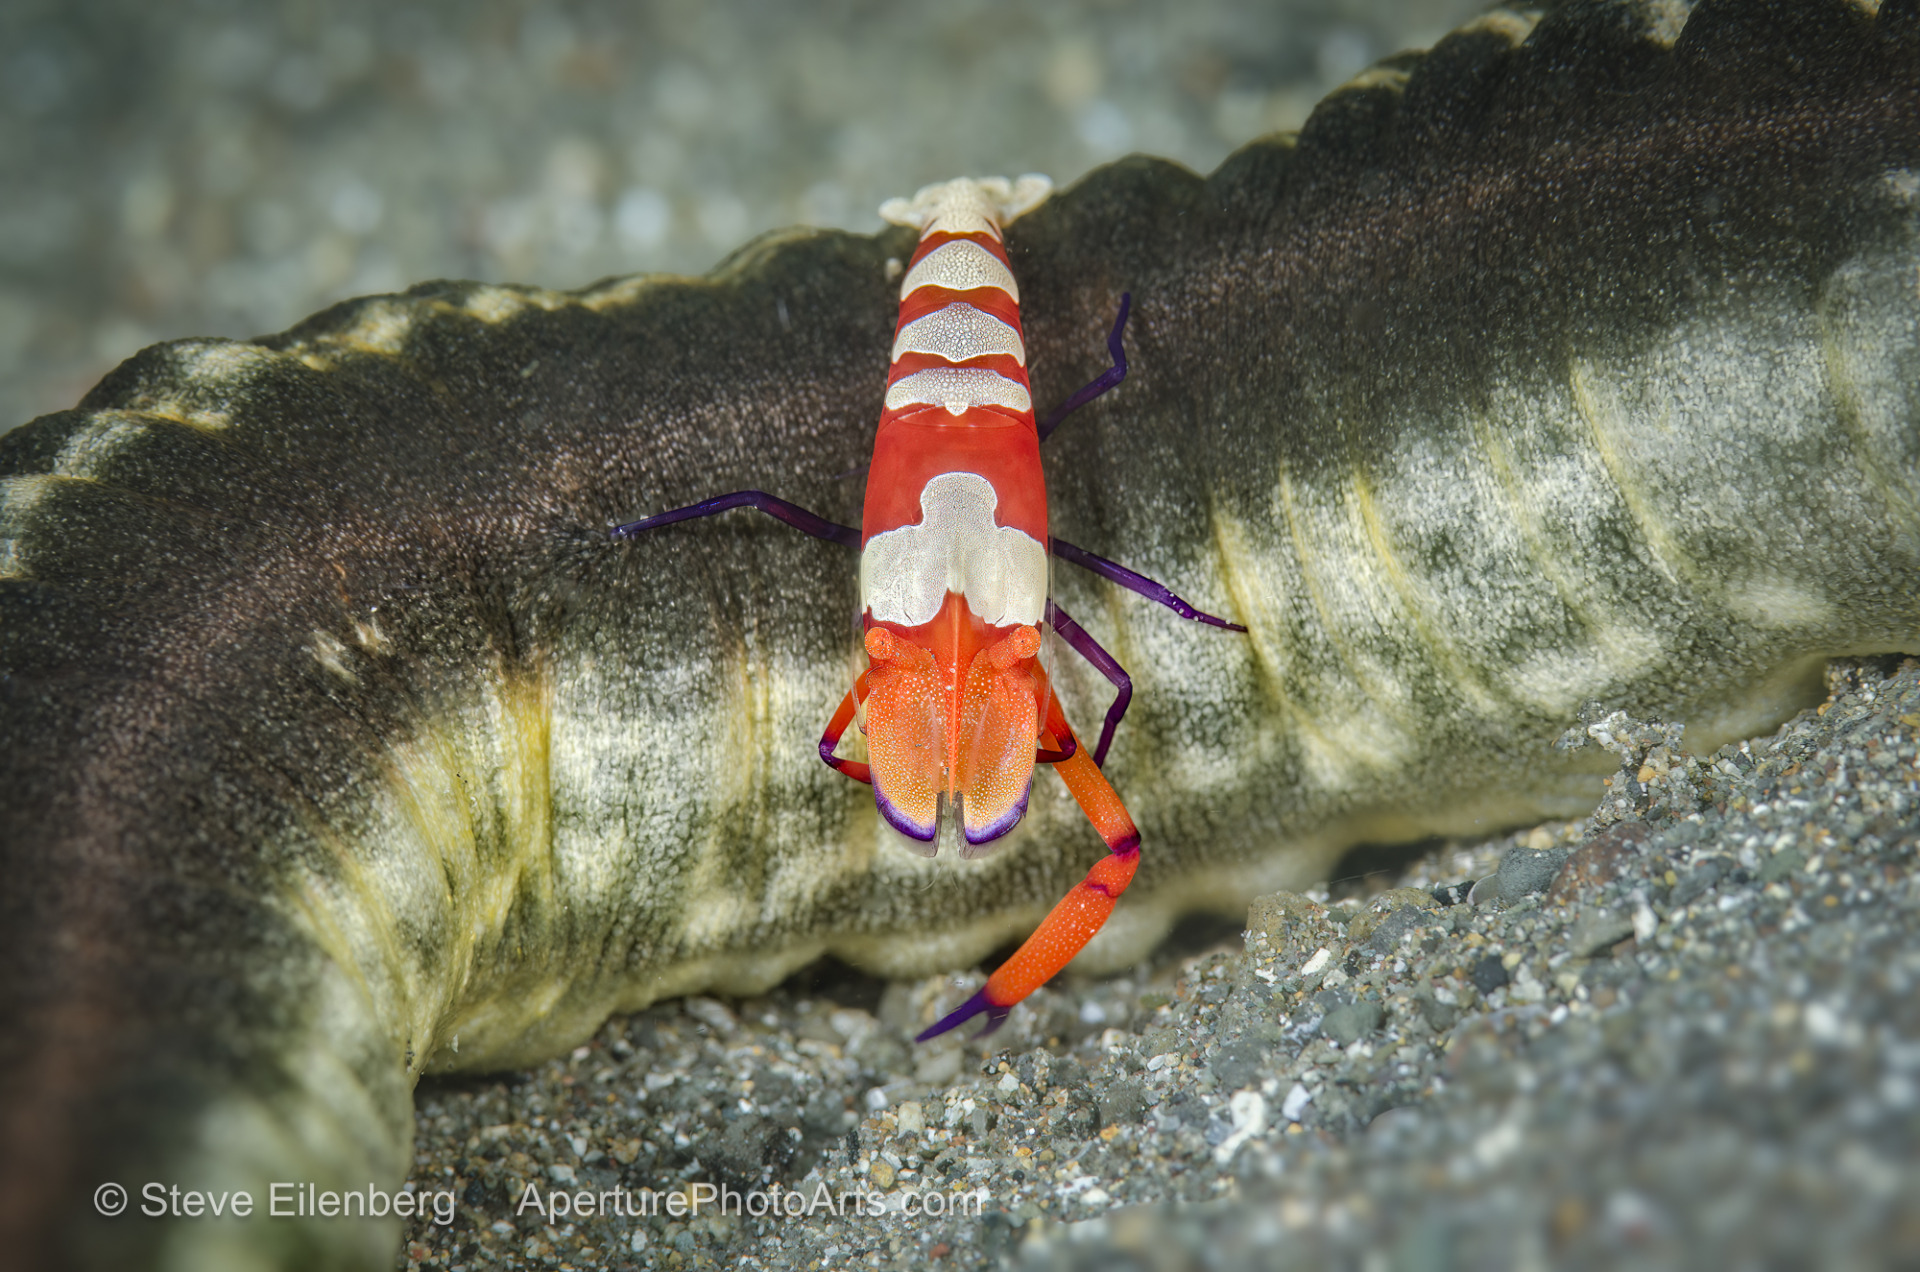 Emperor shrimp on sea cucumber